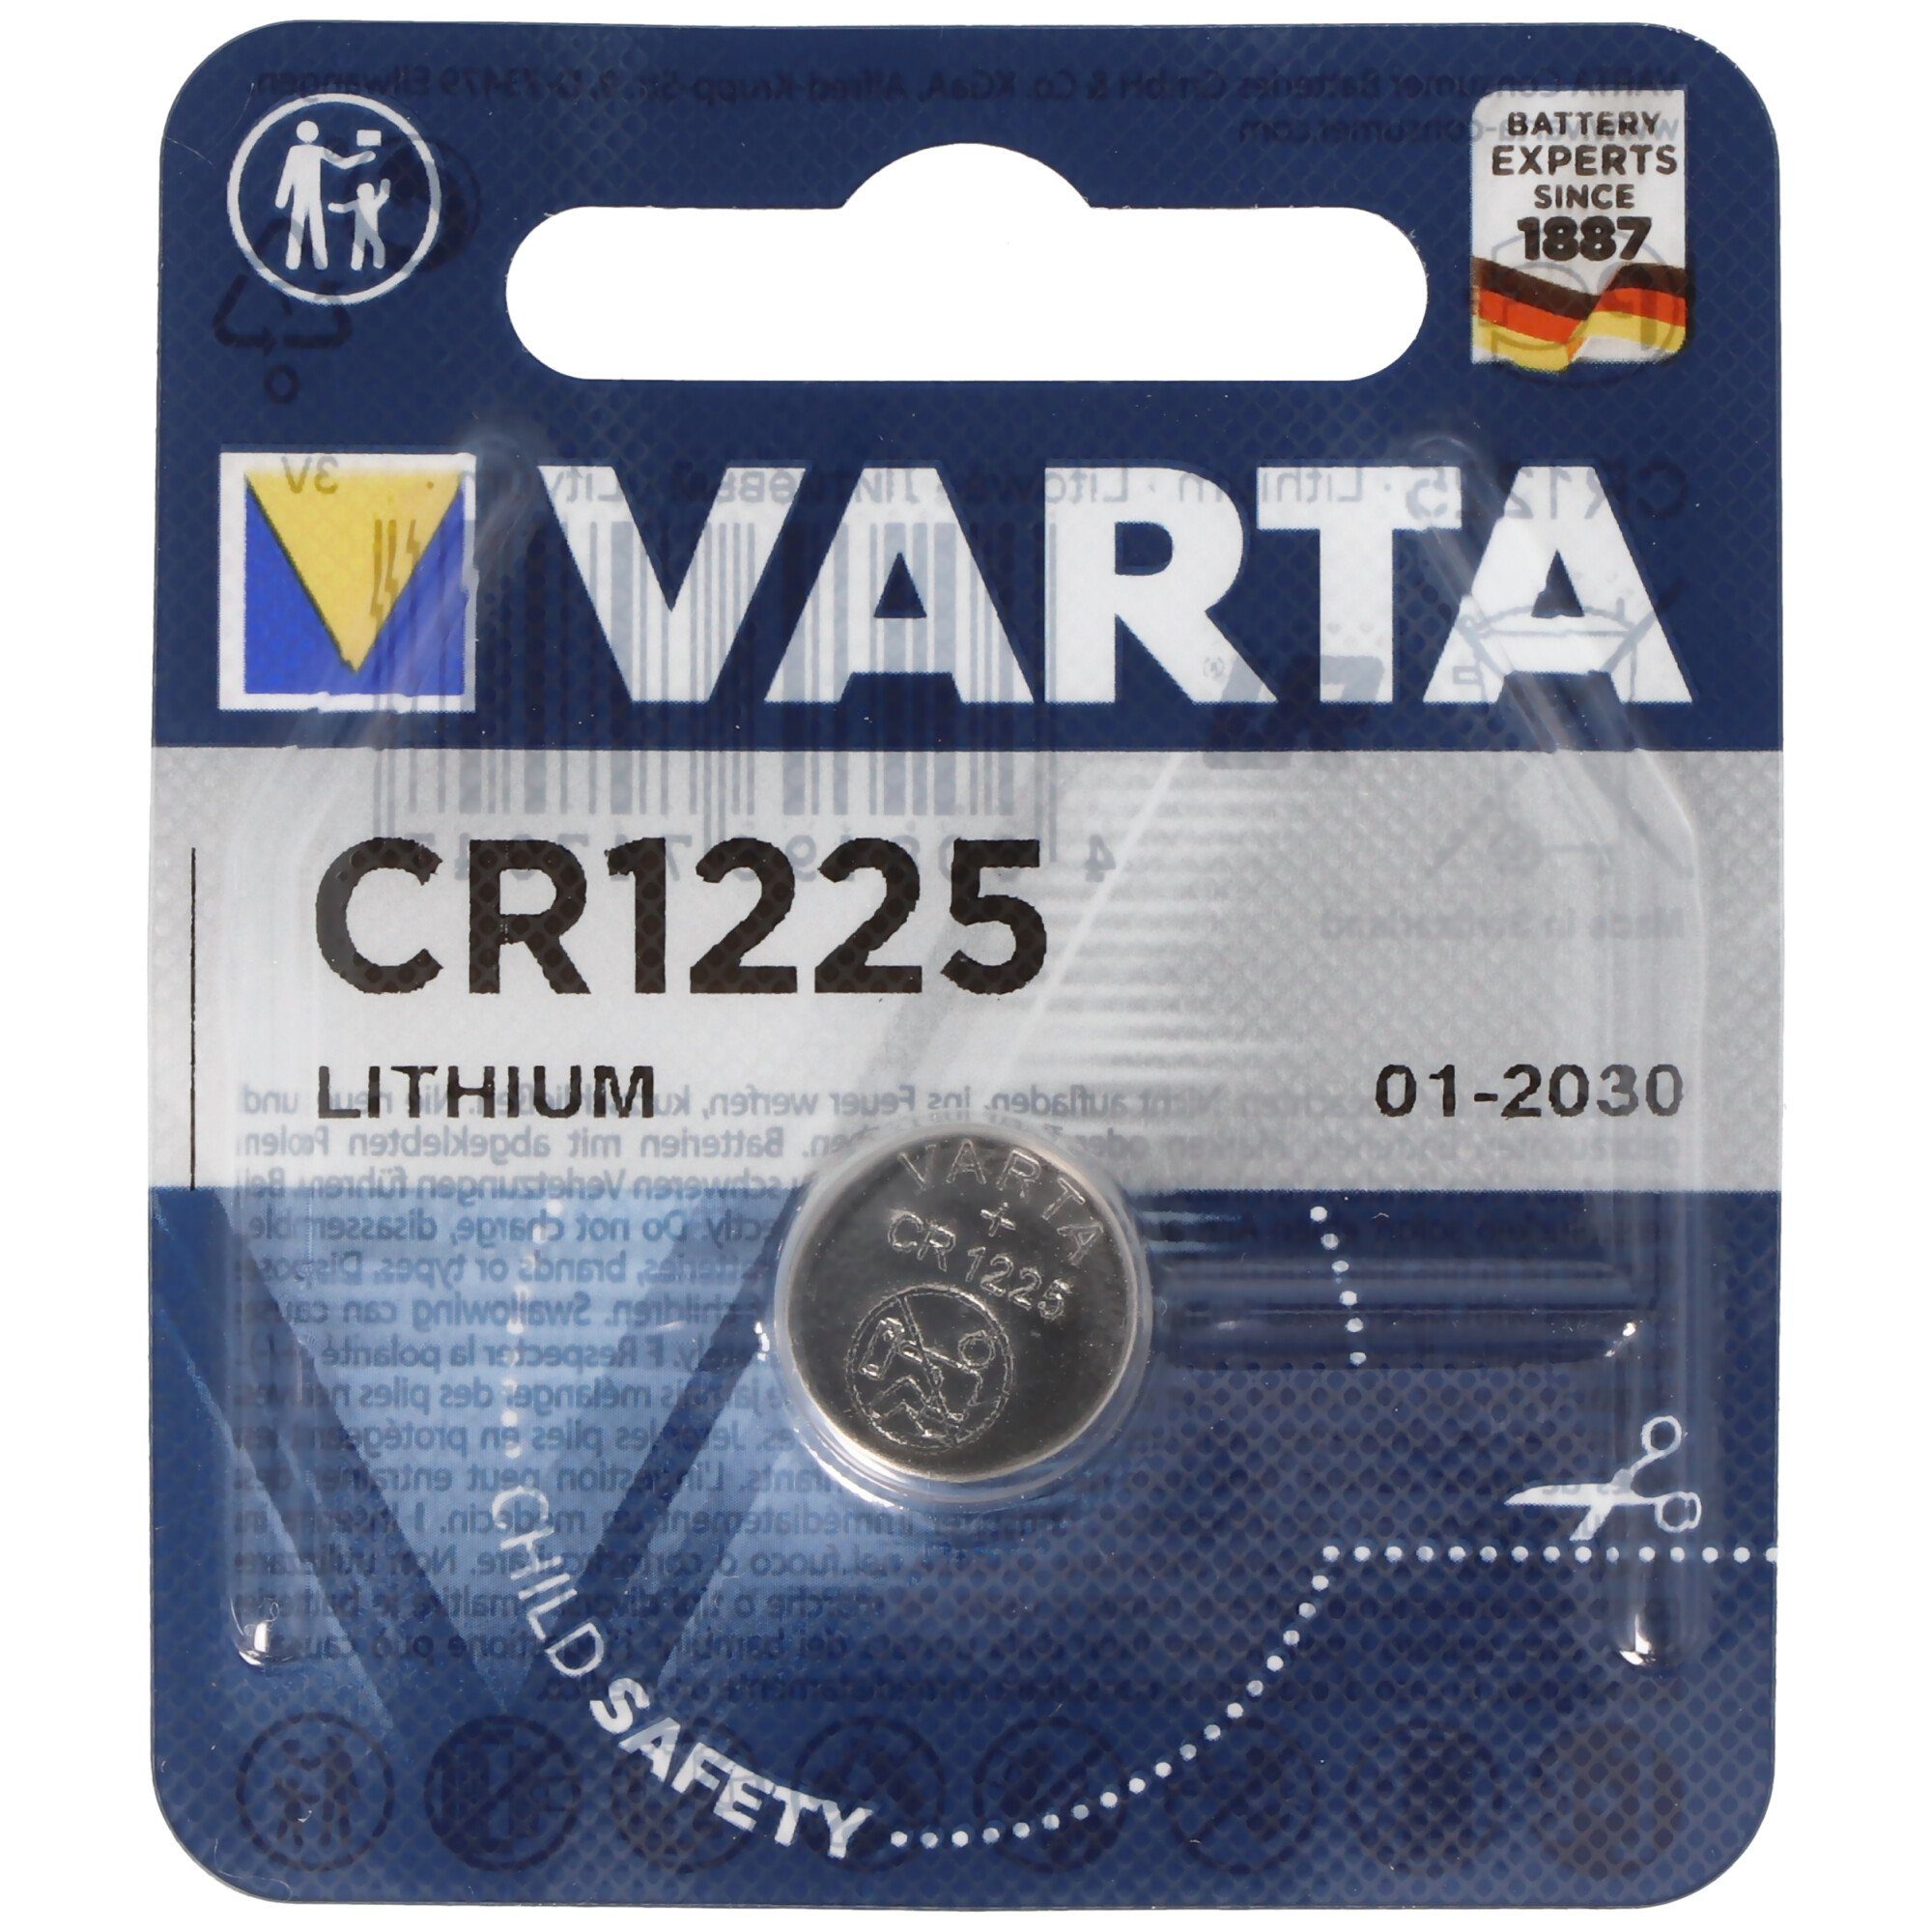 VARTA Varta CR1225 Professional Electronics Batterie 06225101401 IEC CR 122 Batterie, (3,0 V) | Batterien